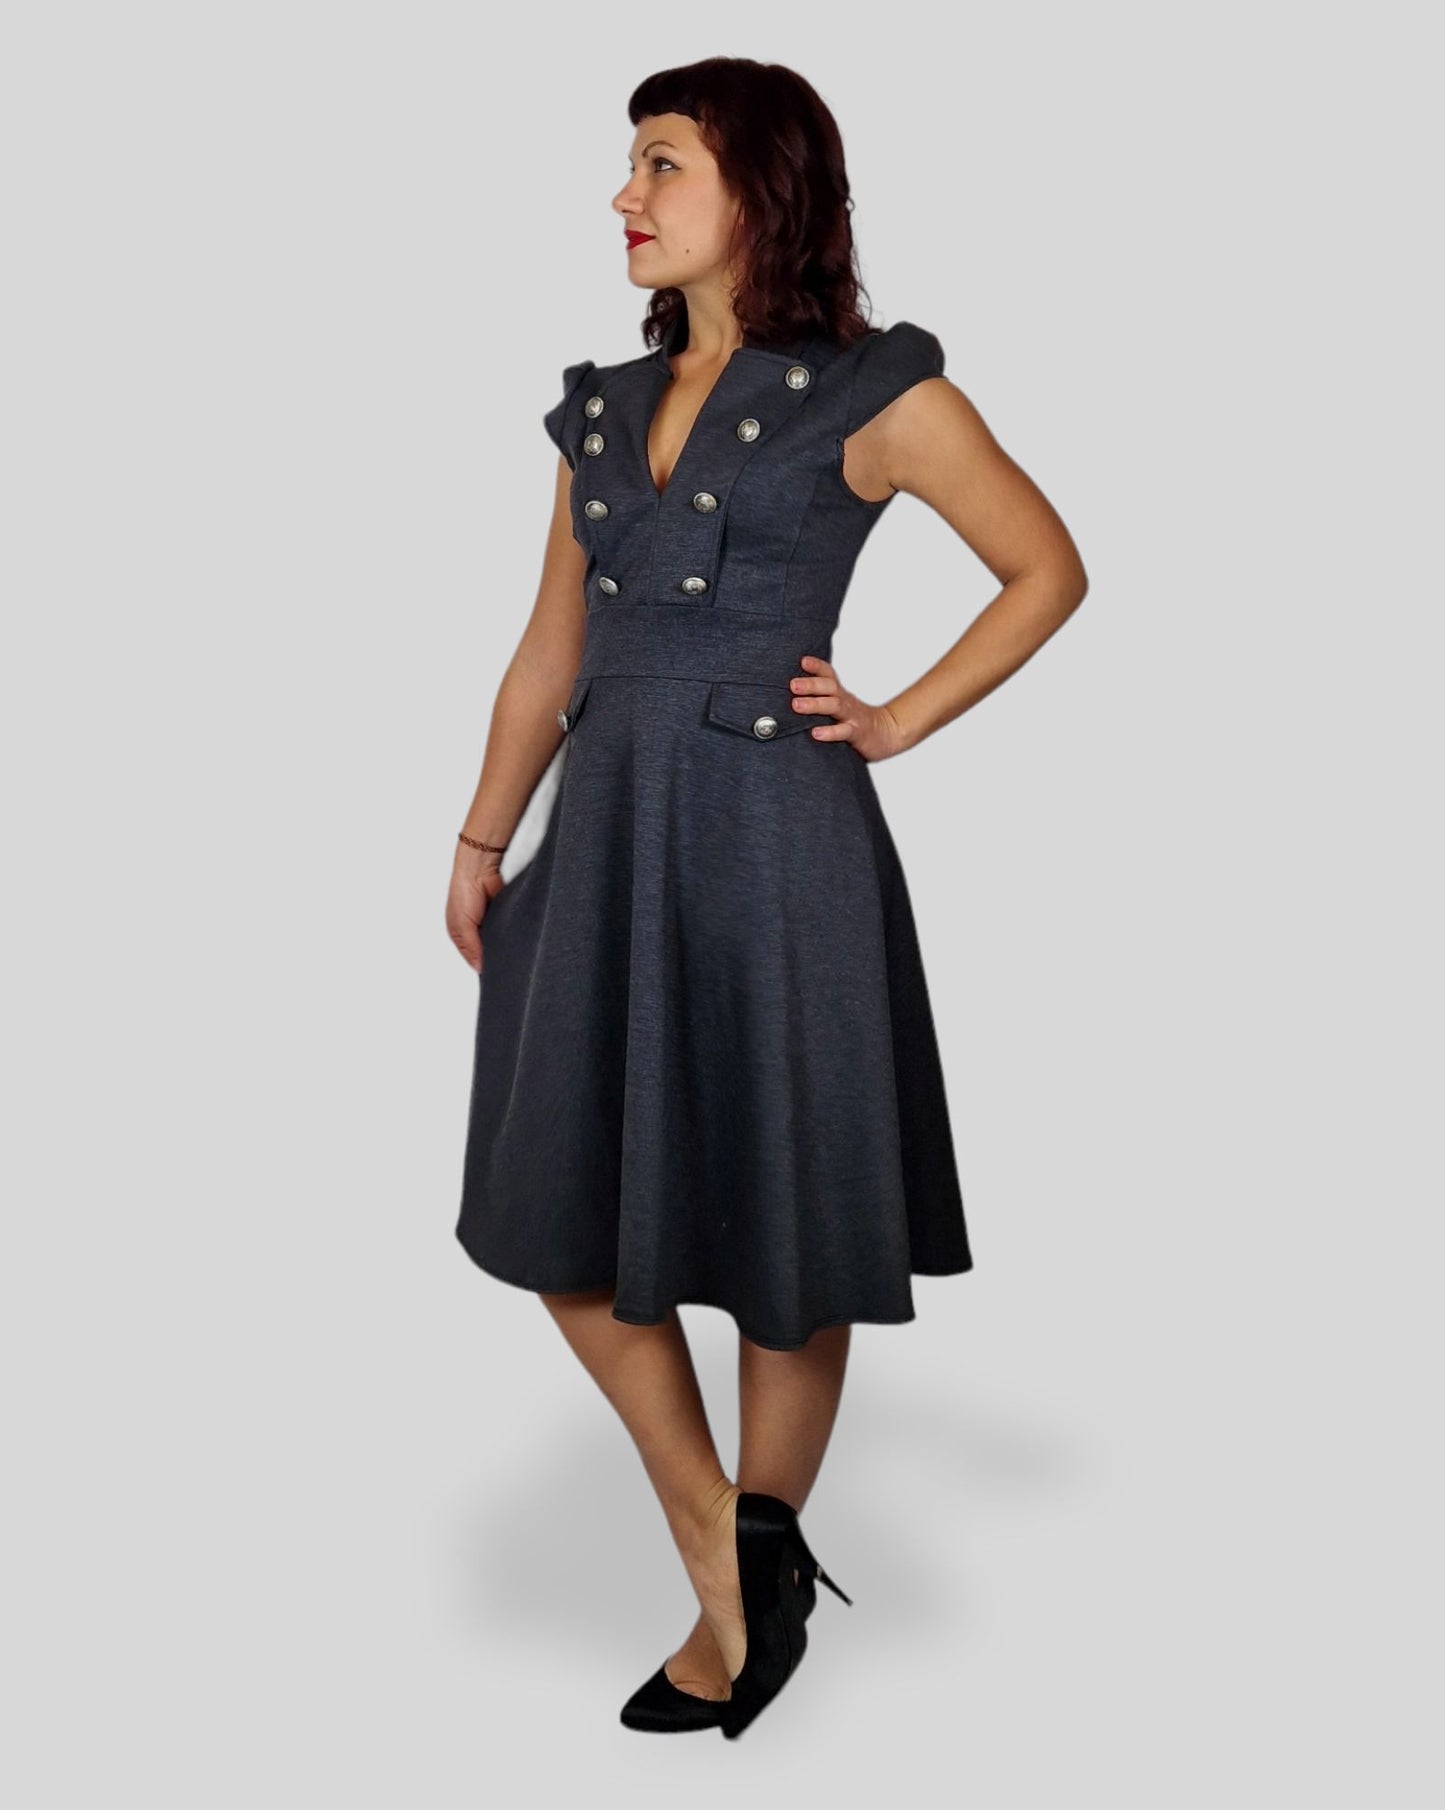 Melange Grey - Inverness Dress - Easy Fit & Winter Fabric